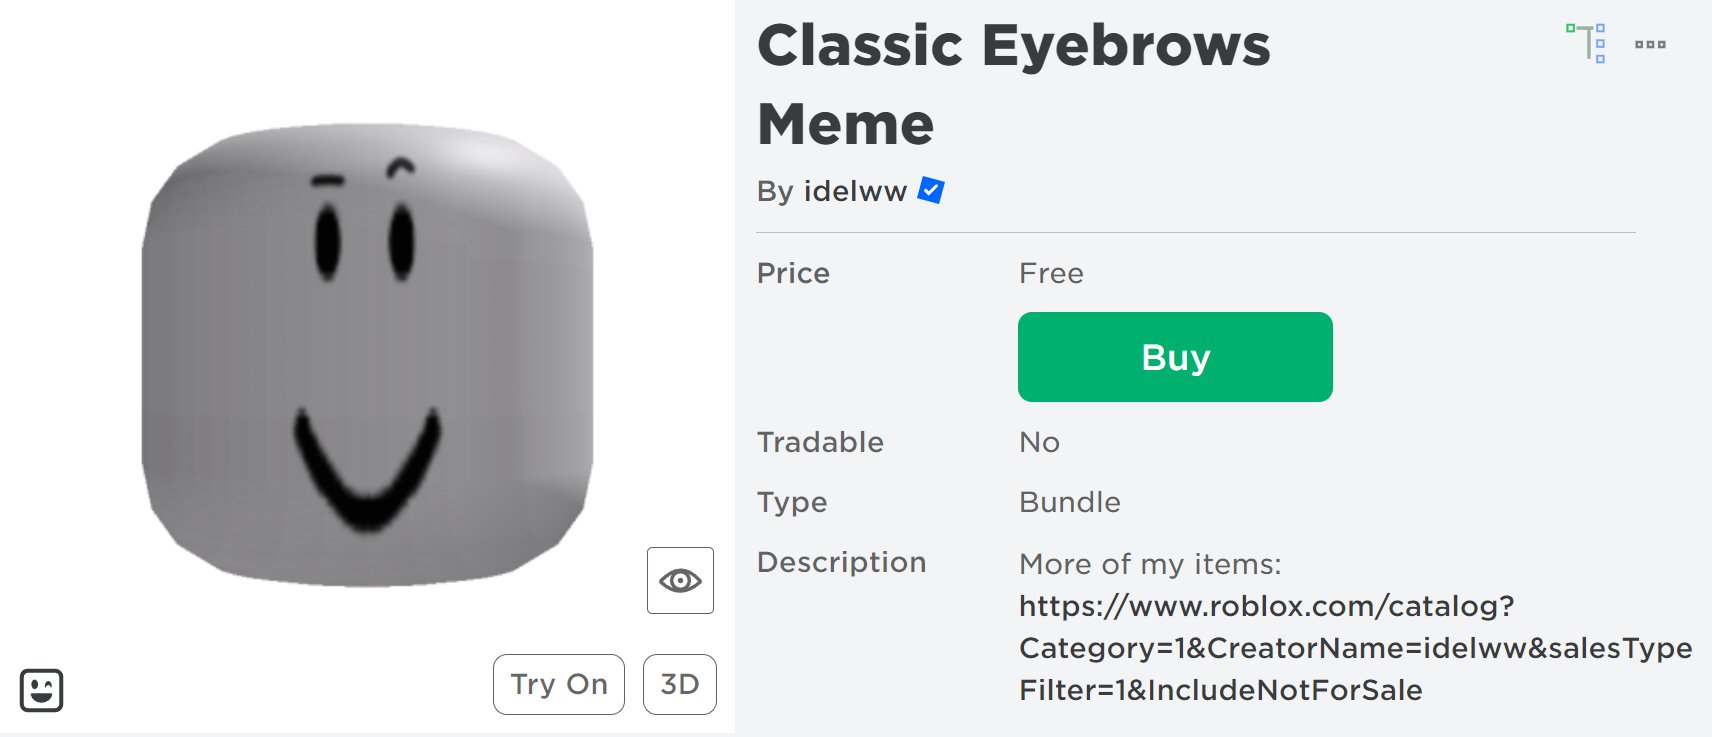 Classic Eyebrows Meme - Roblox